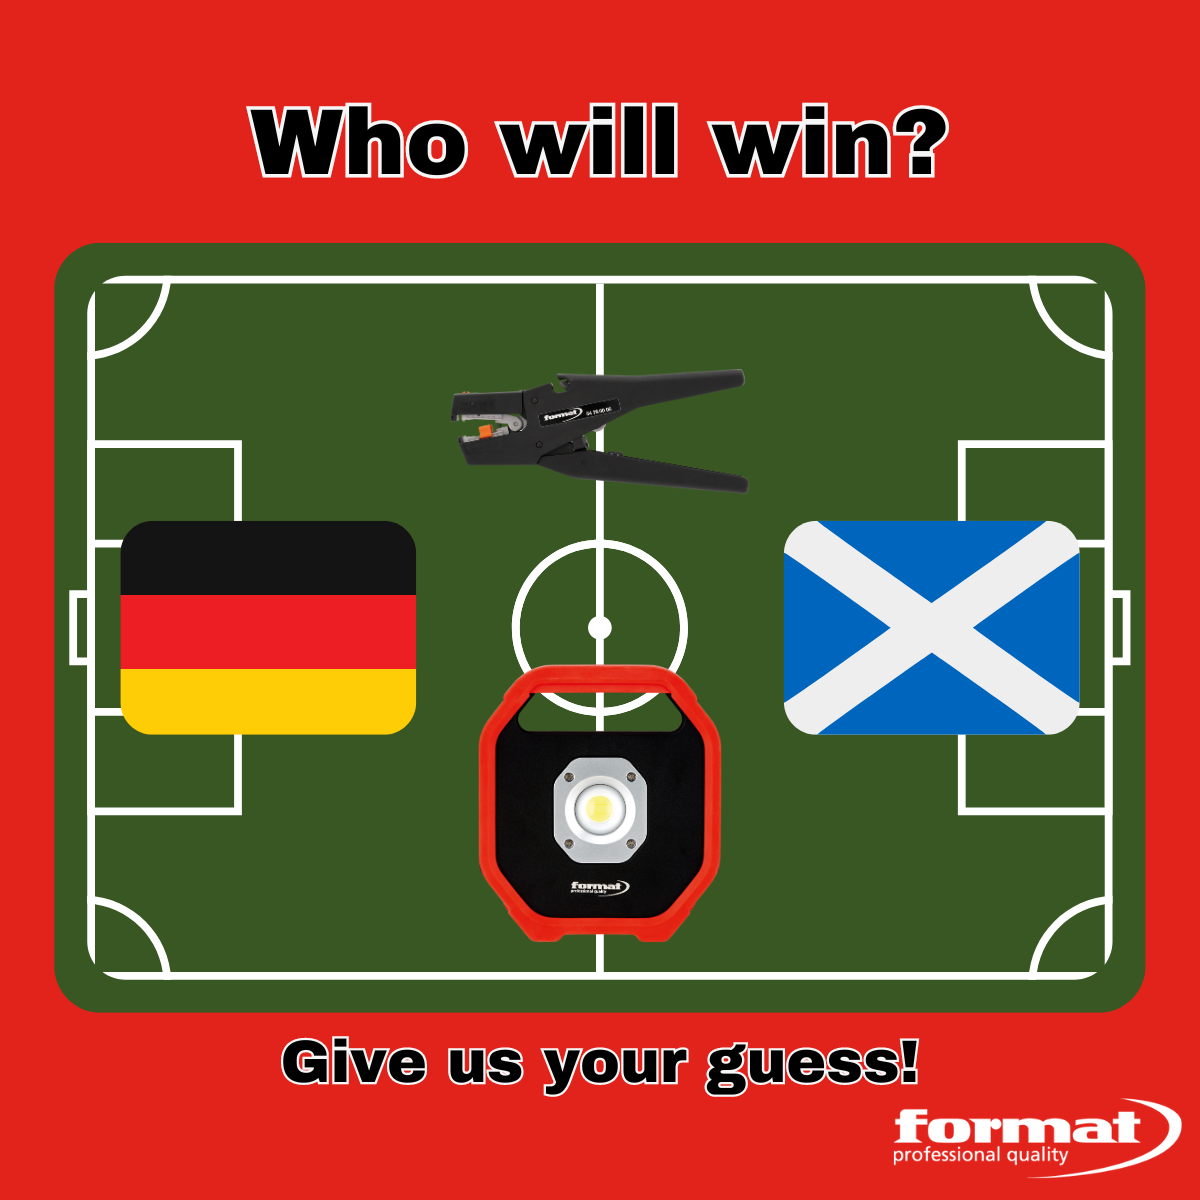 Germany vs. Scotland